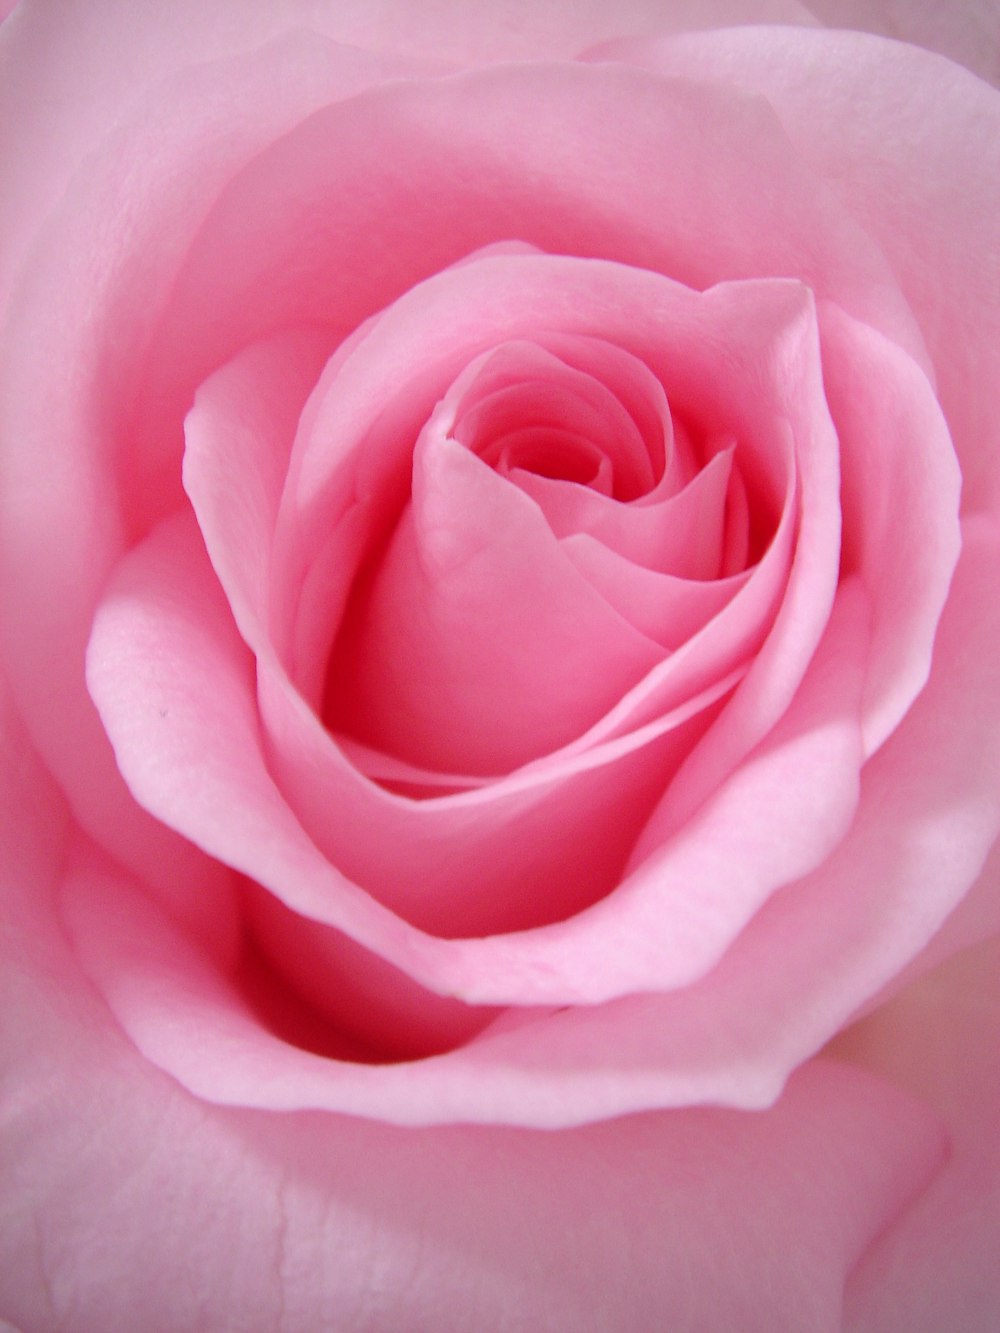 100+ Pink Flower Imagens  Baixar Fotos Grátis no Unsplash